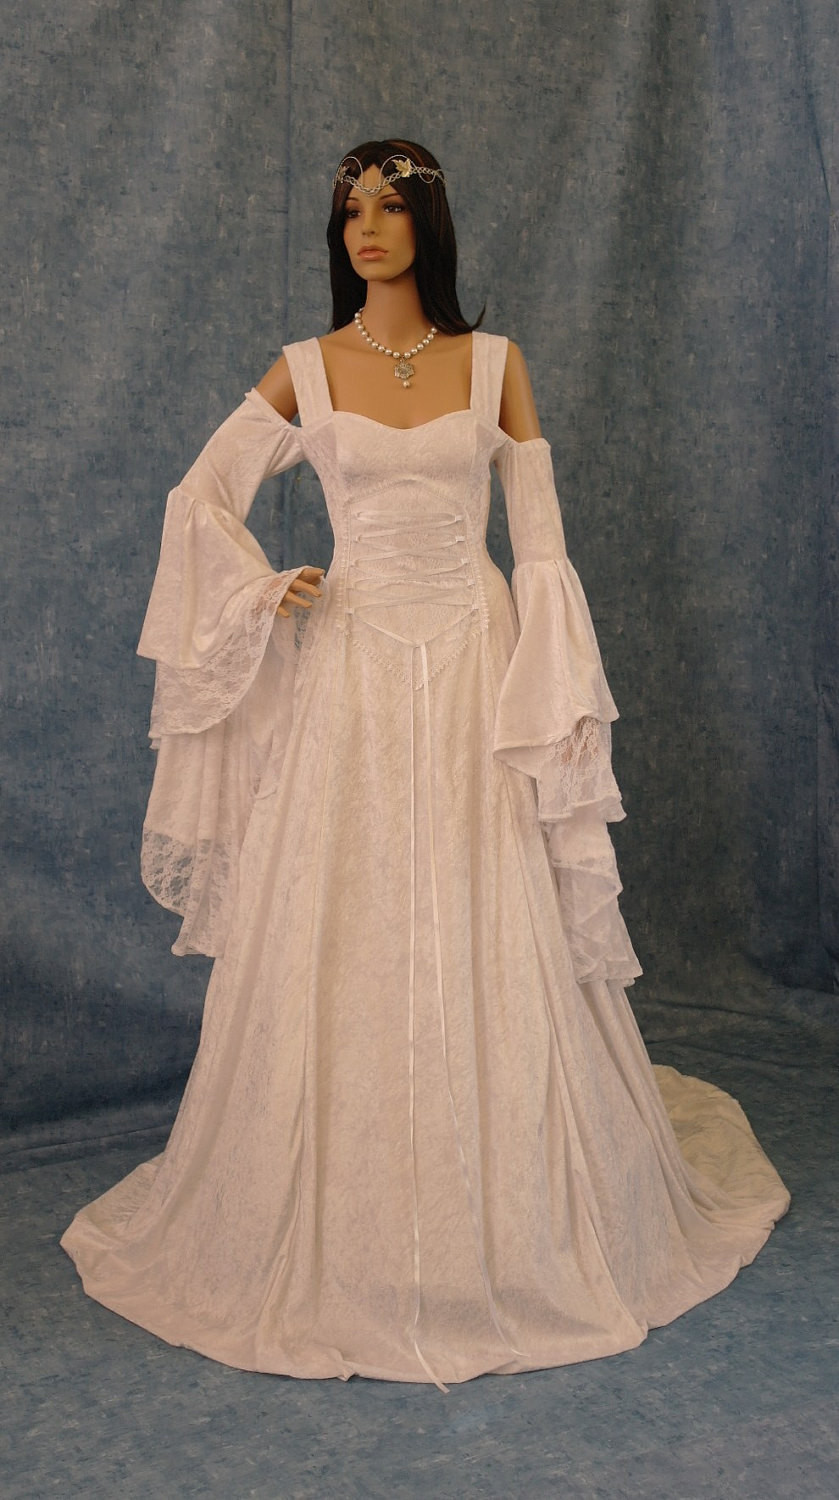 Medieval Wedding Dresses
 Renaissance me val handfasting wedding dress by